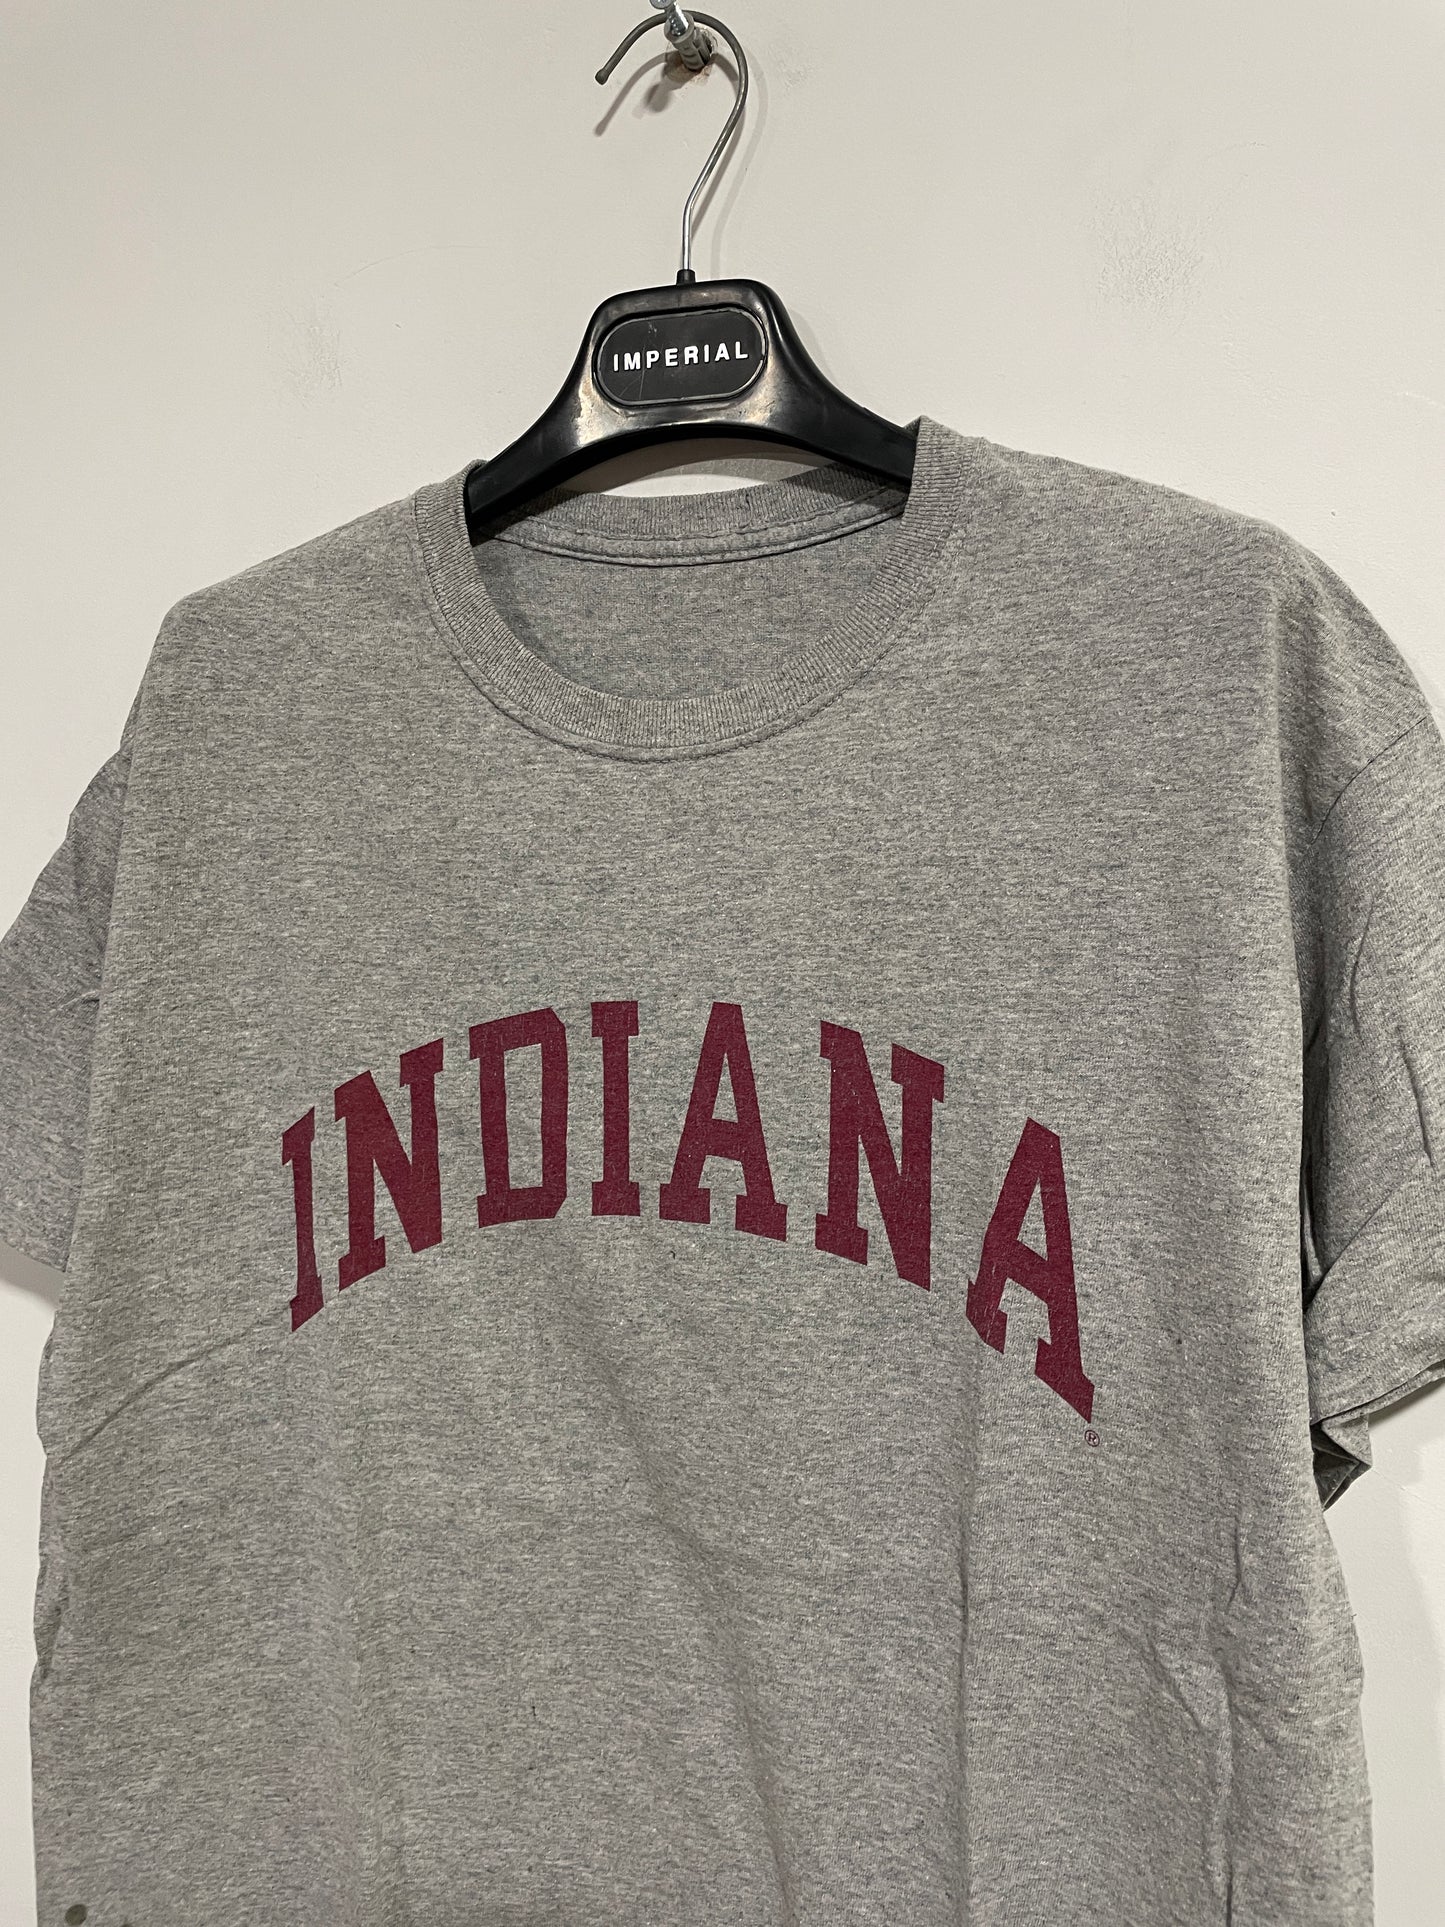 T shirt Indiana USA (B363)